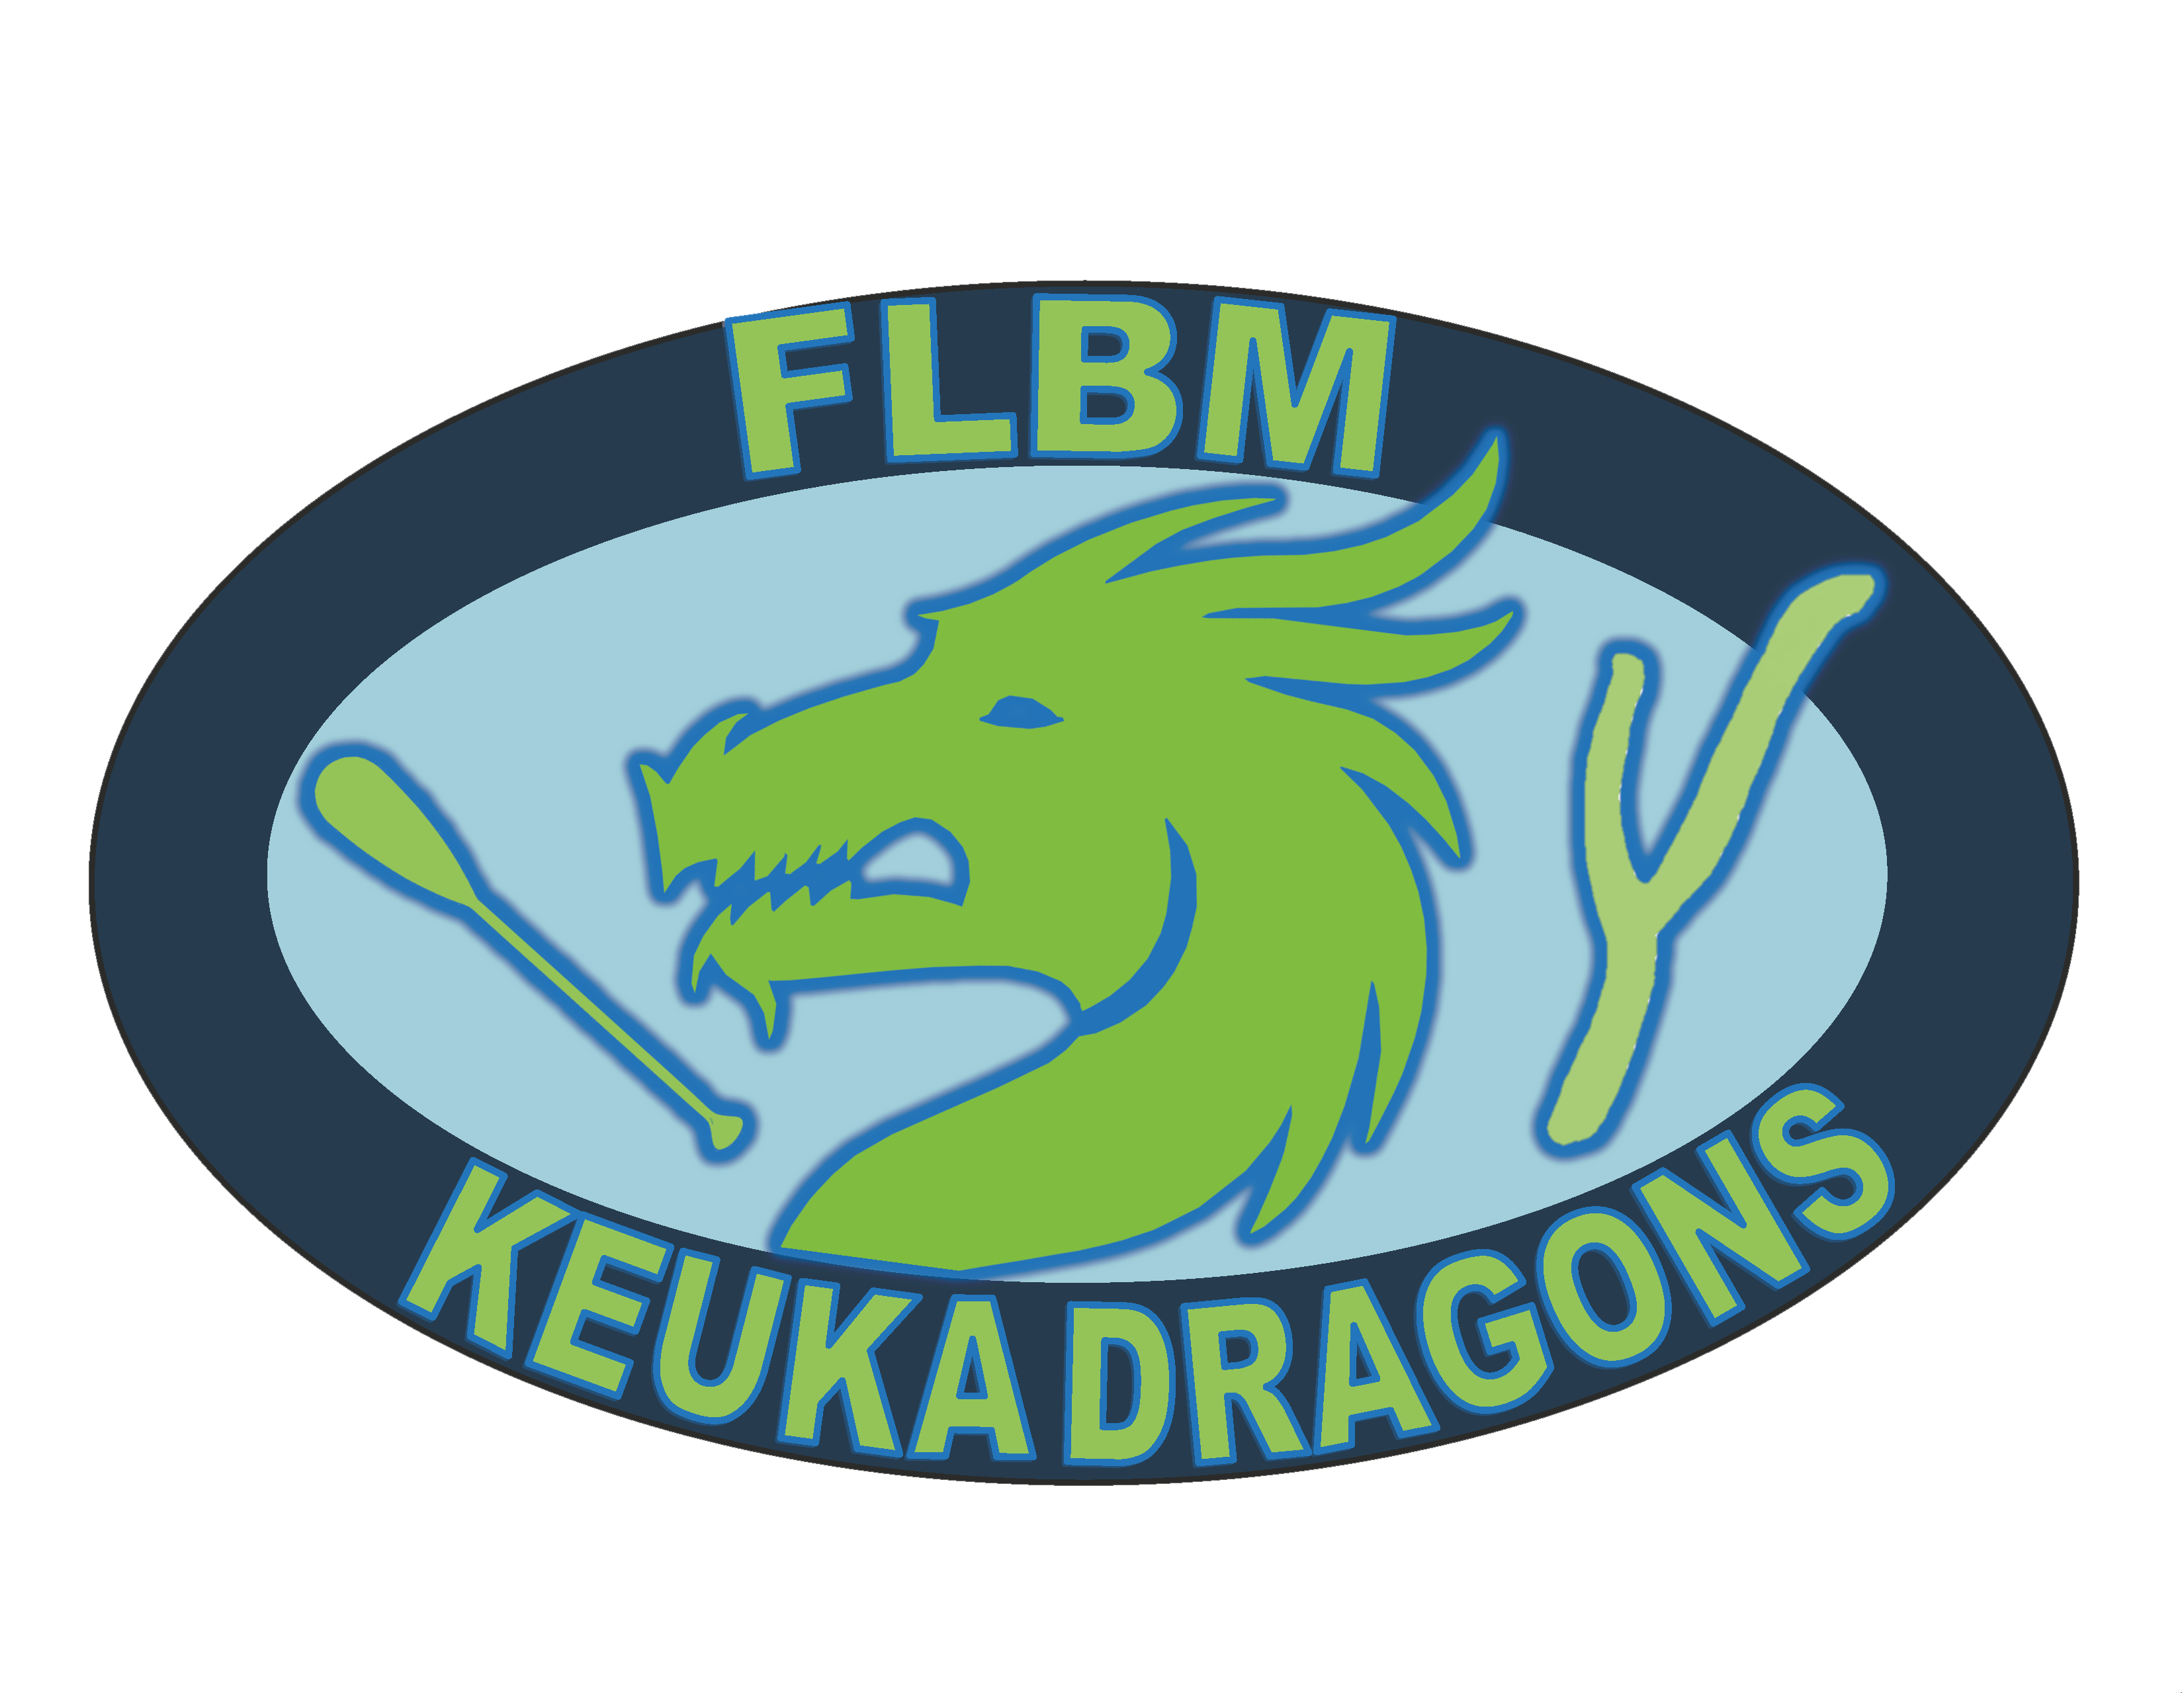 Keuka Dragon Boat Club Logo